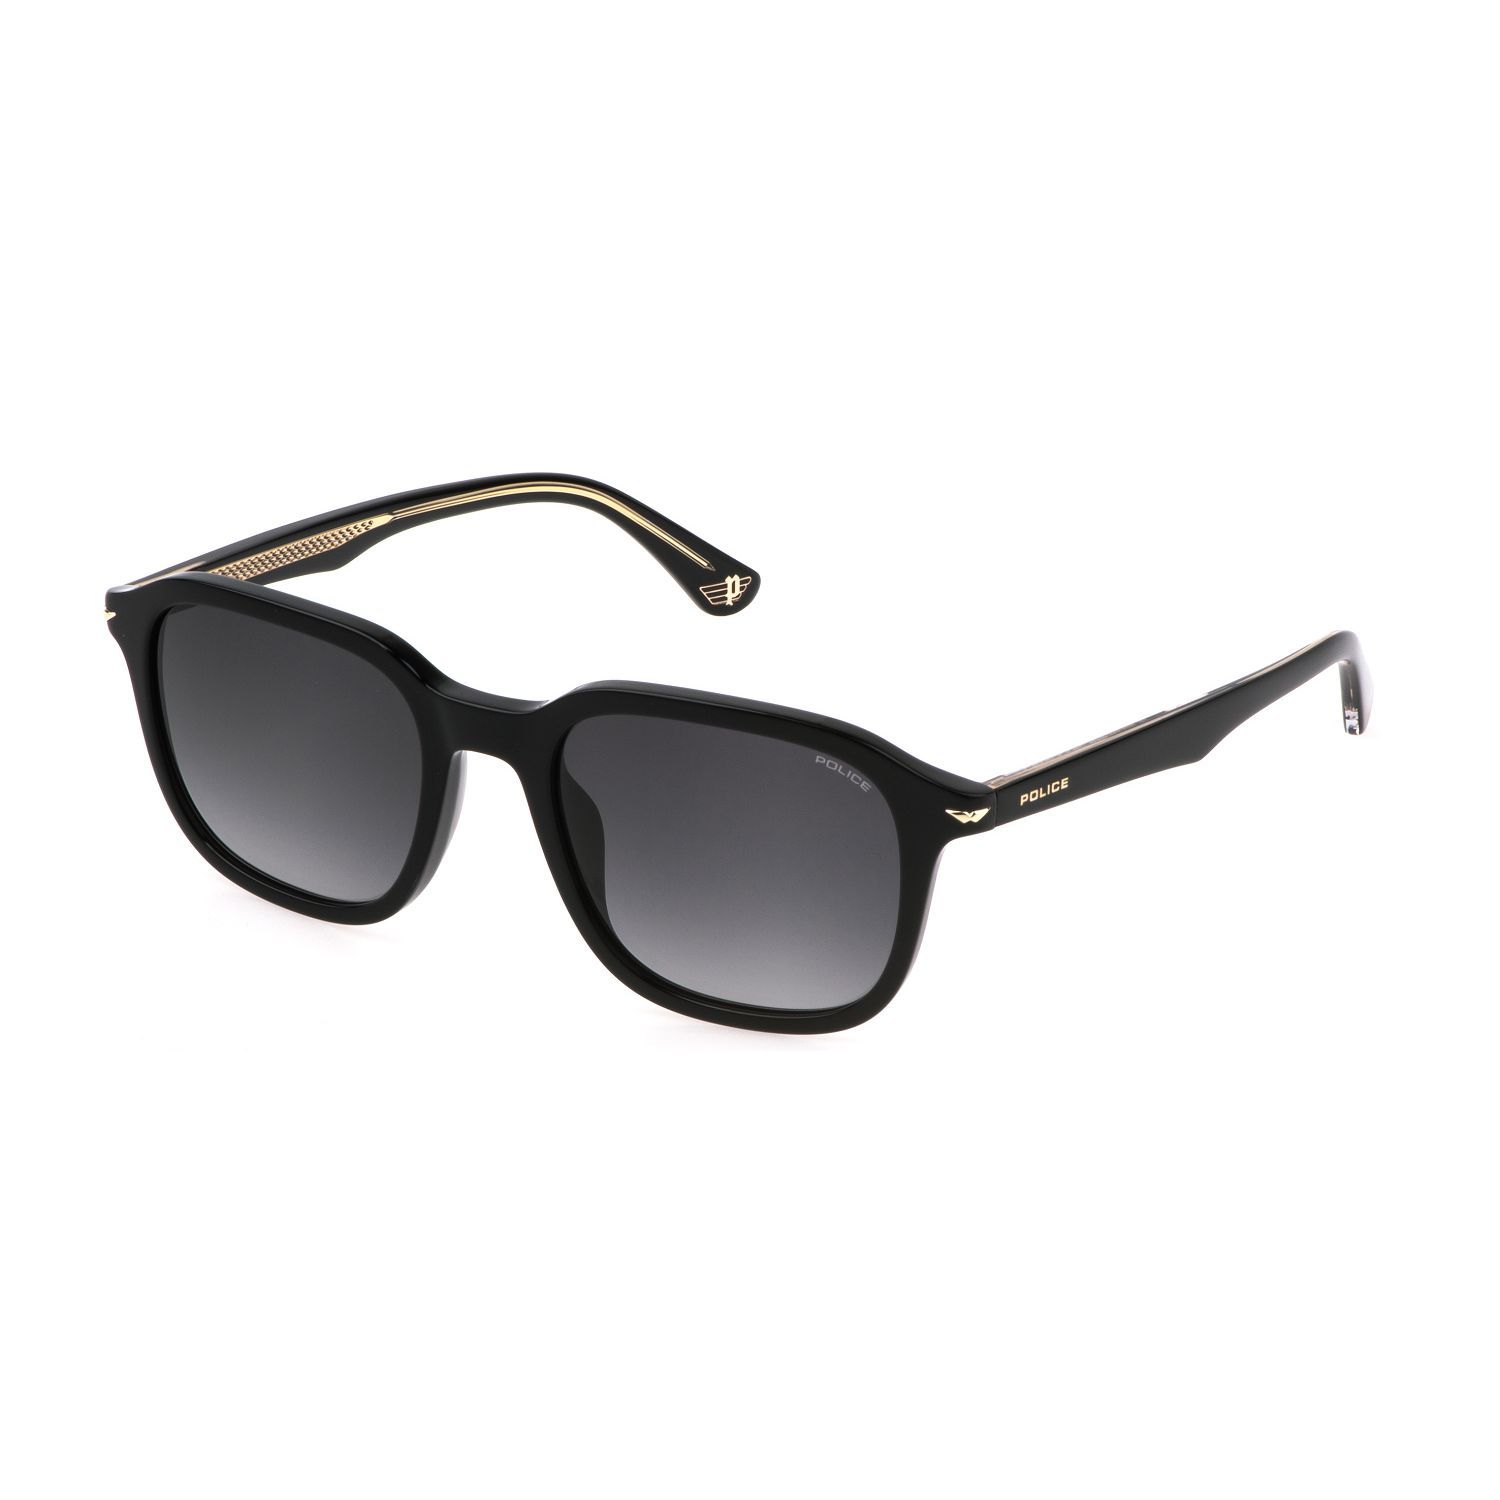 SPLL81M Square Sunglasses 0700 - size 53